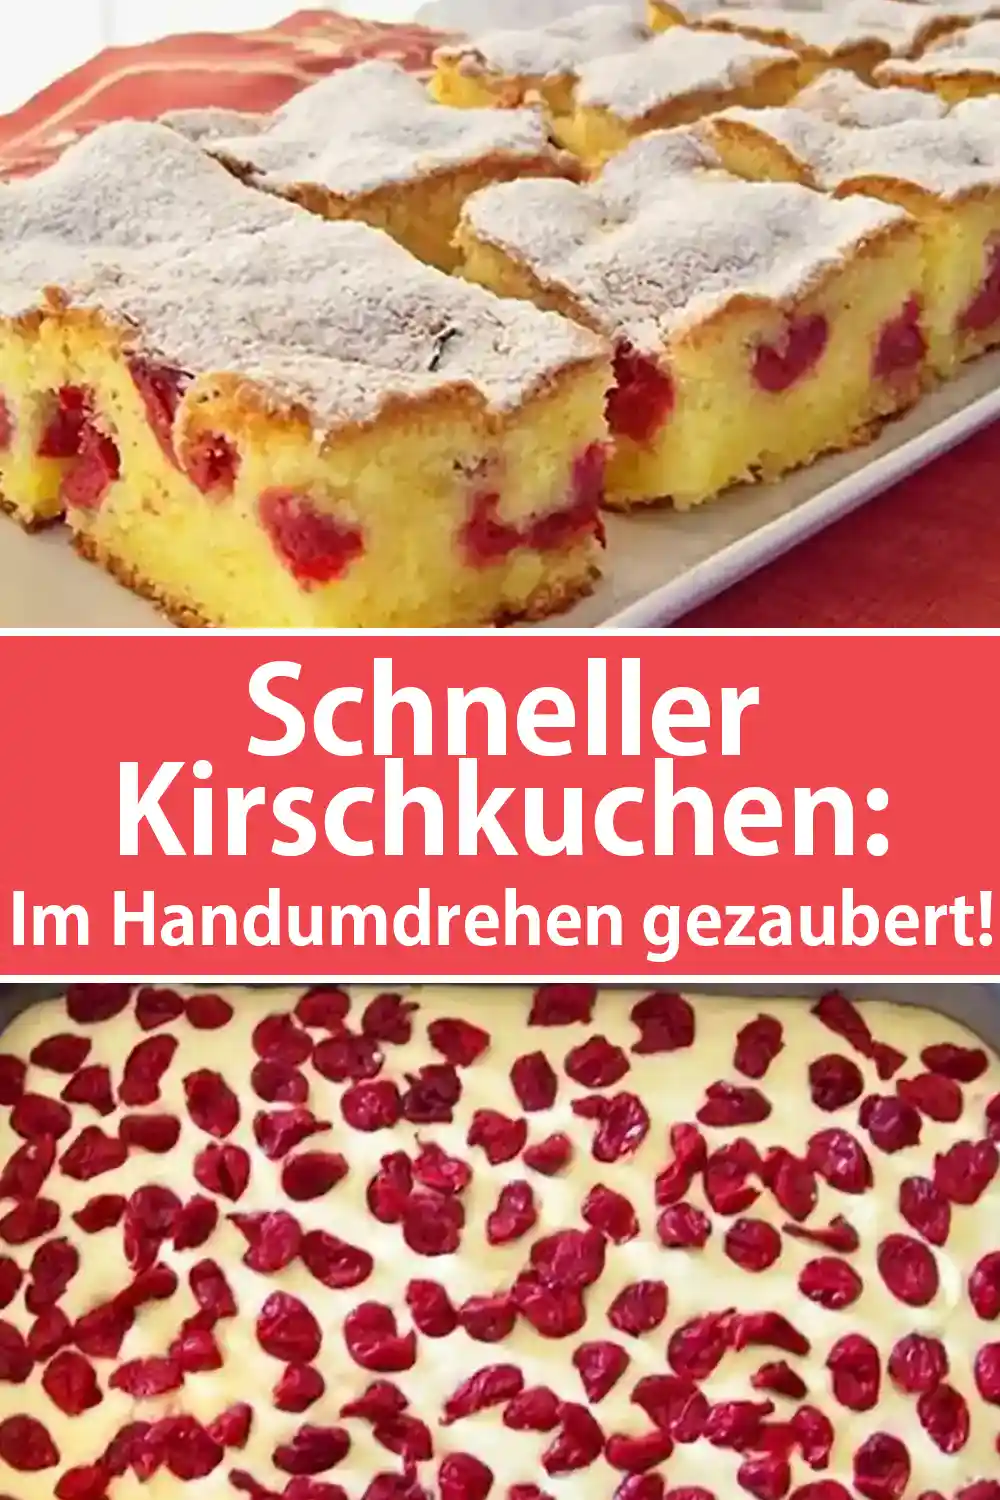 Schneller Kirschkuchen Rezept: Im Handumdrehen gezaubert!